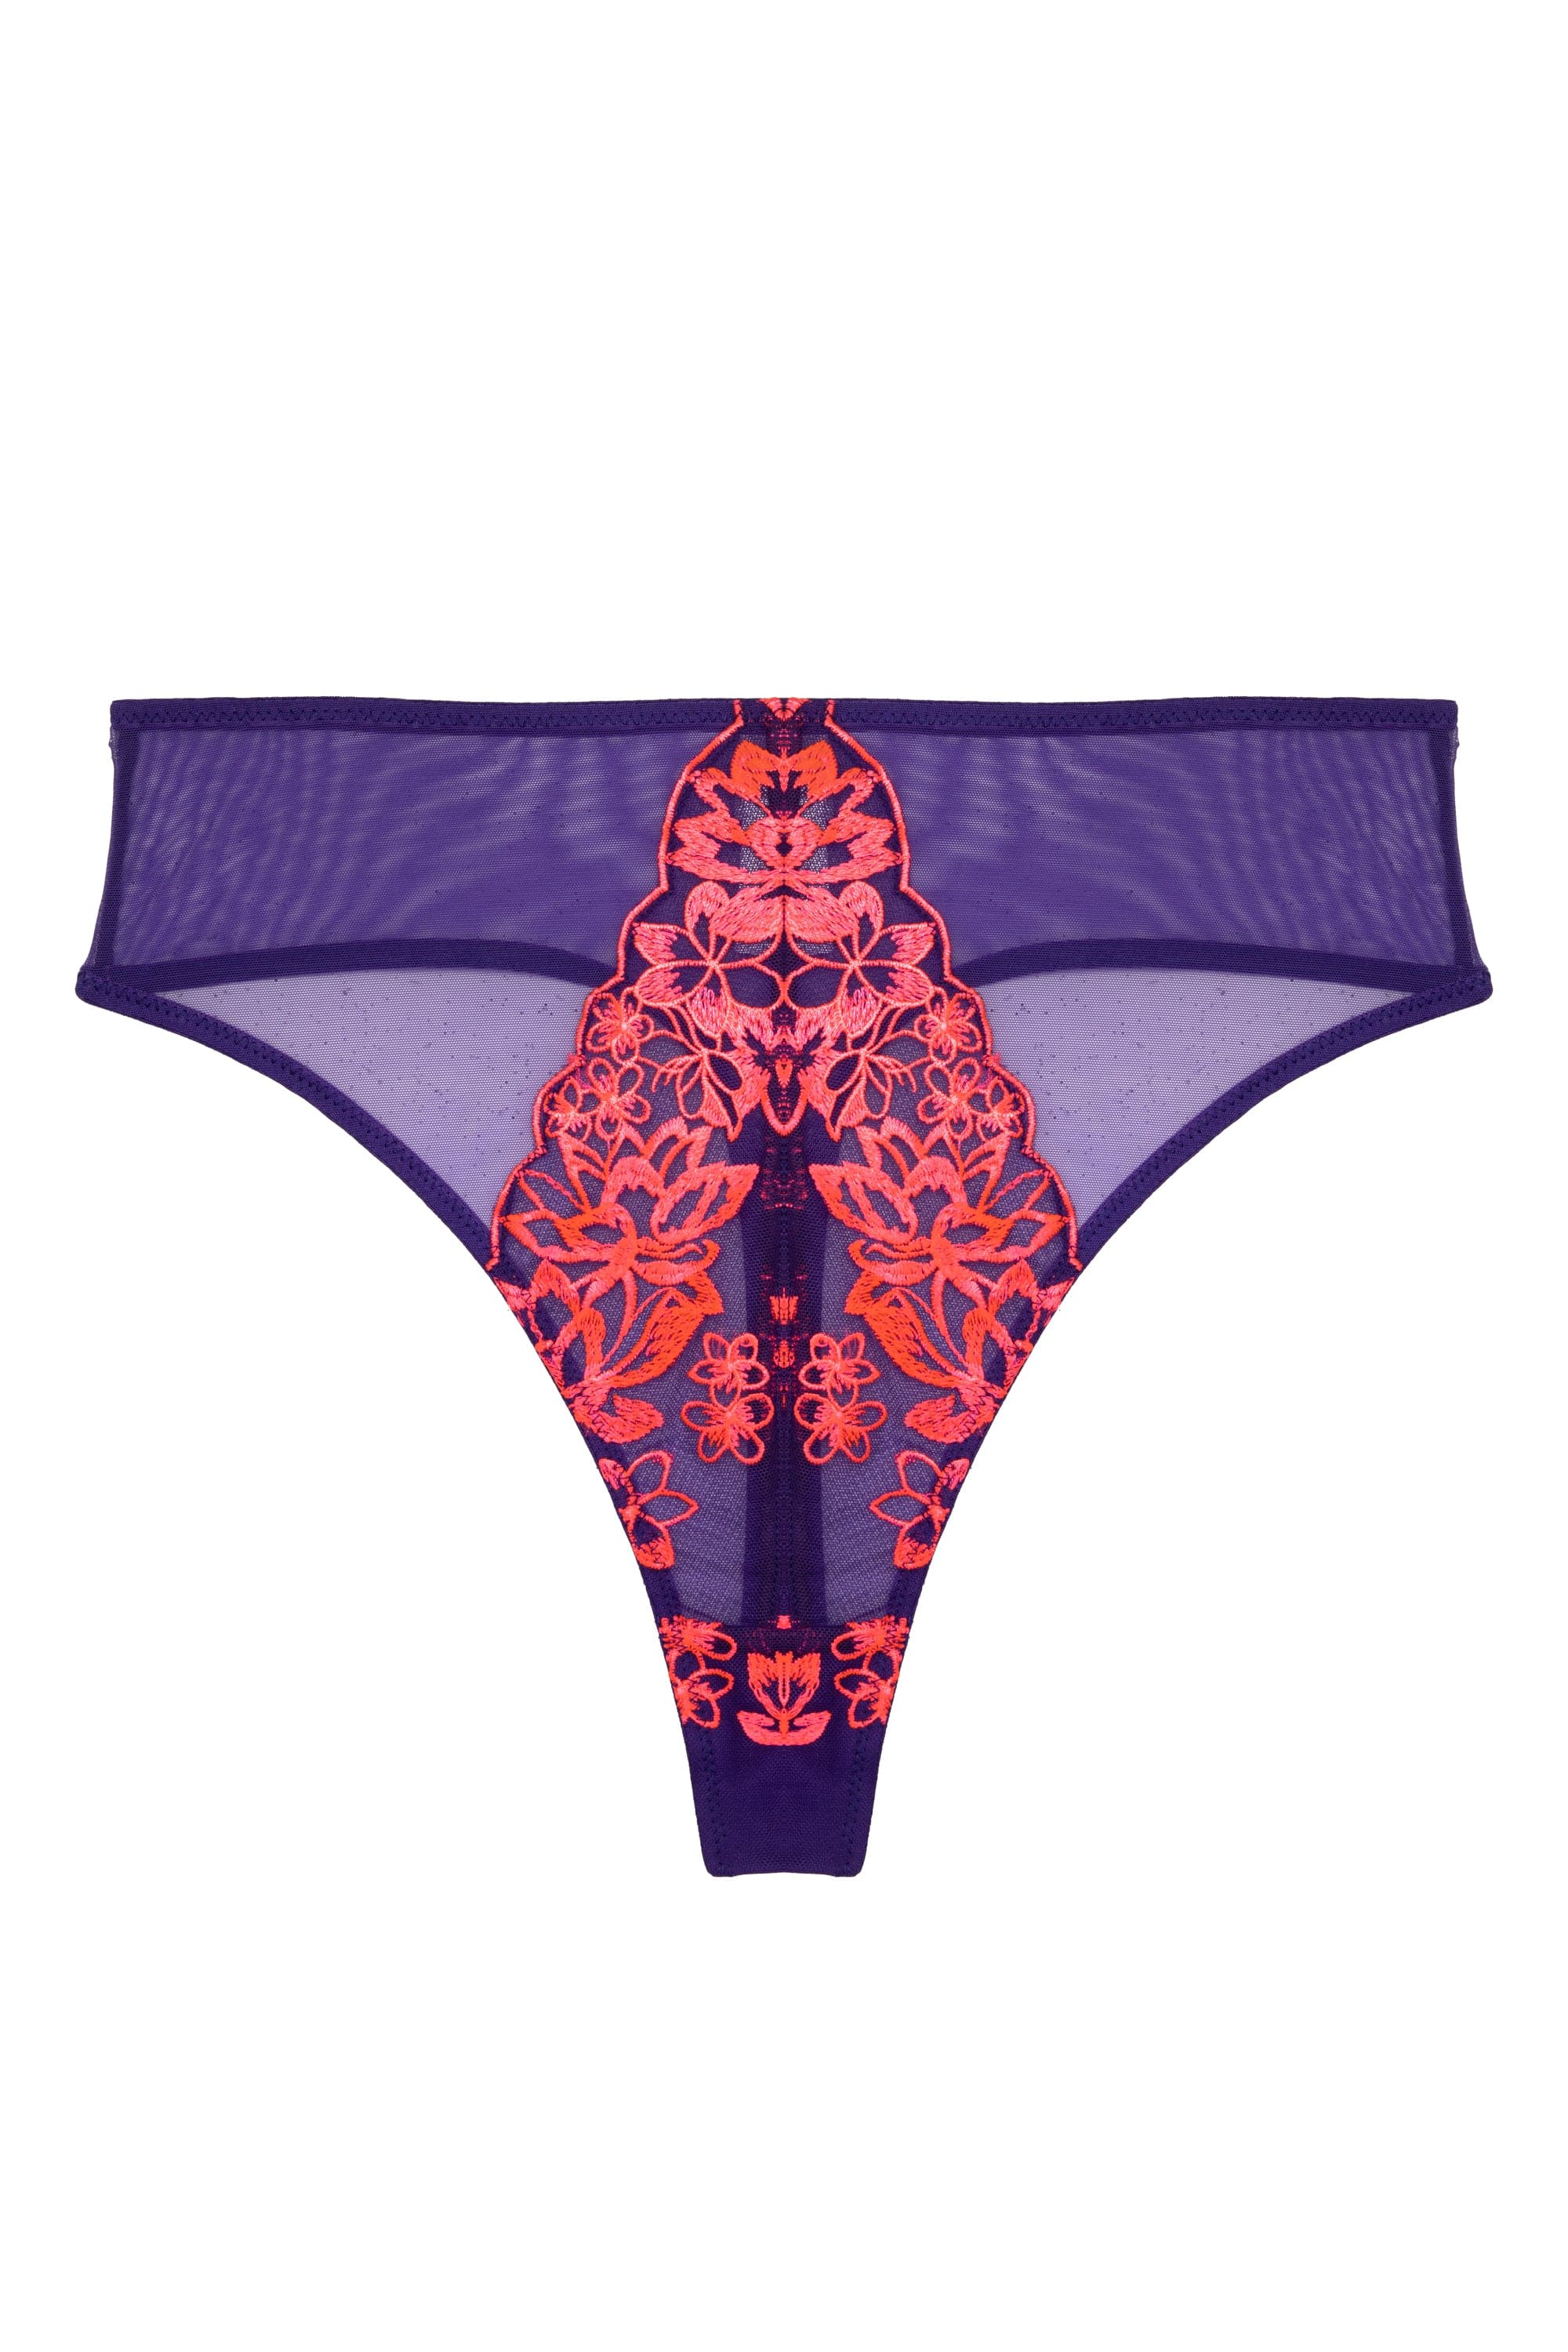 Victoria's Secret Tornado Purple Sheer Mesh & Lace Cutout Cheeky Knickers